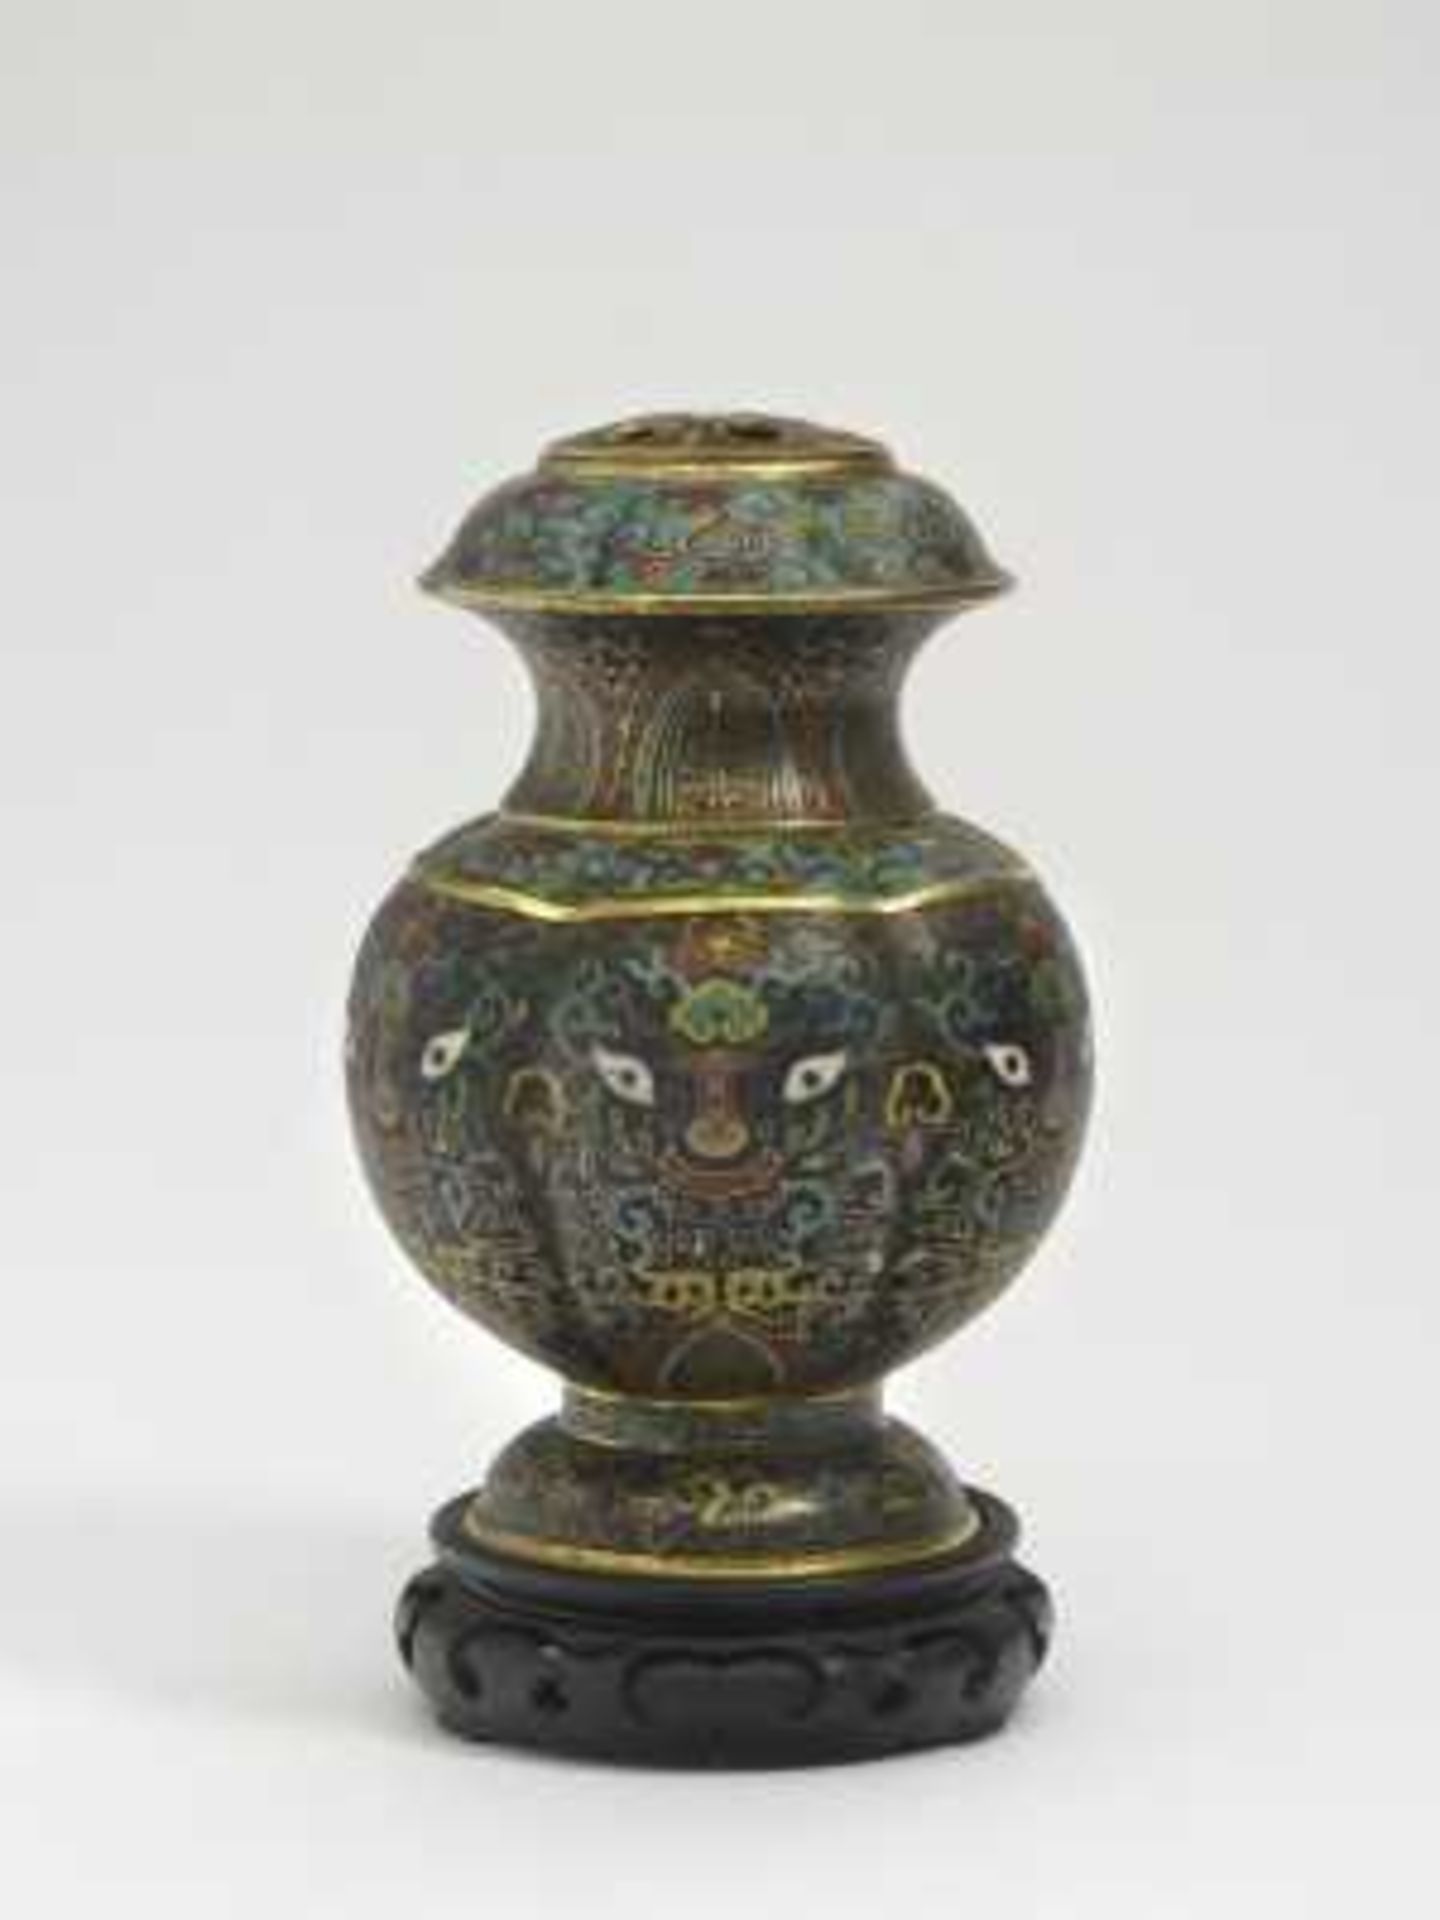 Cloisonné-Brûle-Parfum China, Qing Bronze. Passig gerippte Balusterform. Bunter floraler und